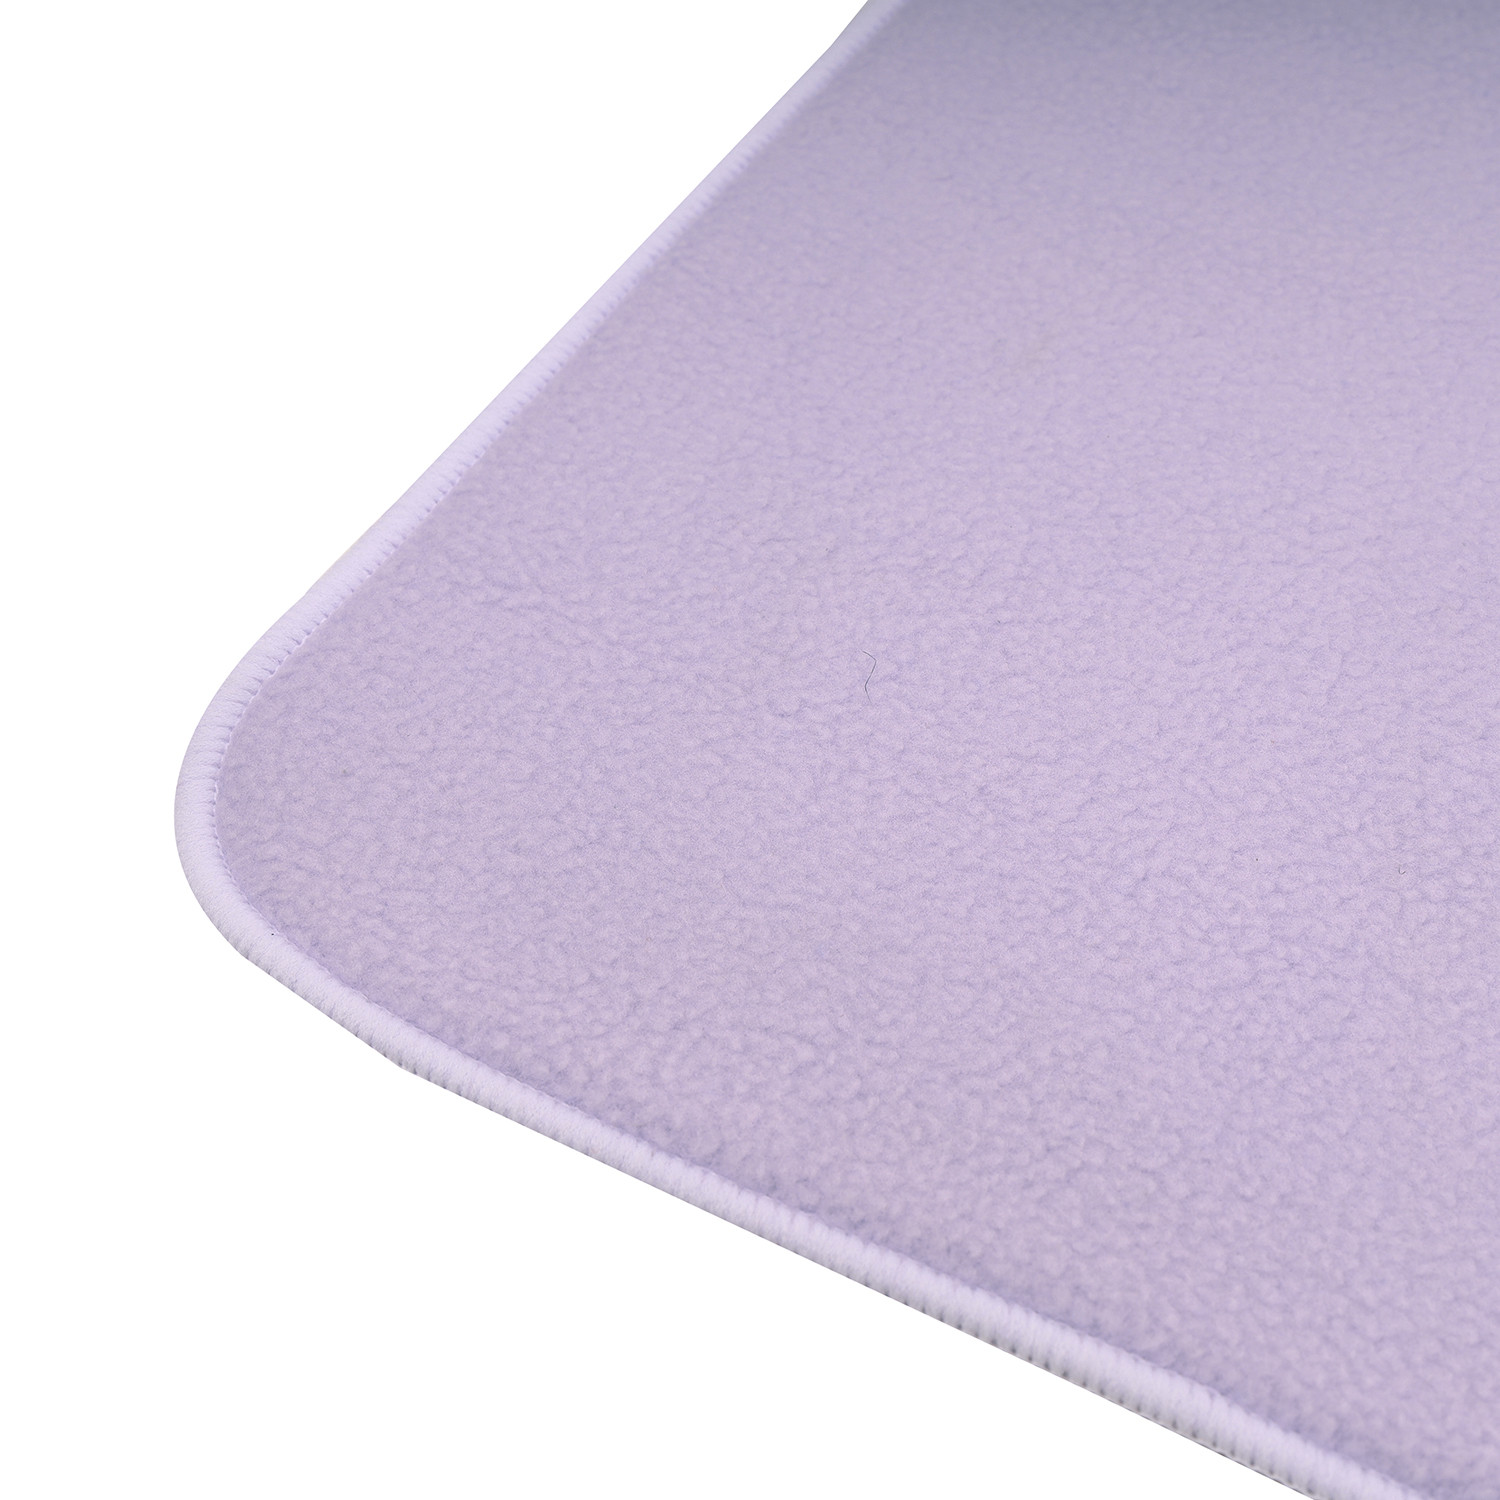 Kuber Industries Dish Dry Mat | Microfiber Drying Mat | Reversible Kitchen Drying Mat | Absorbent Mat | Kitchen Dish Dry Mat | 38x50 | Pack of 2 | Red & Light Purple